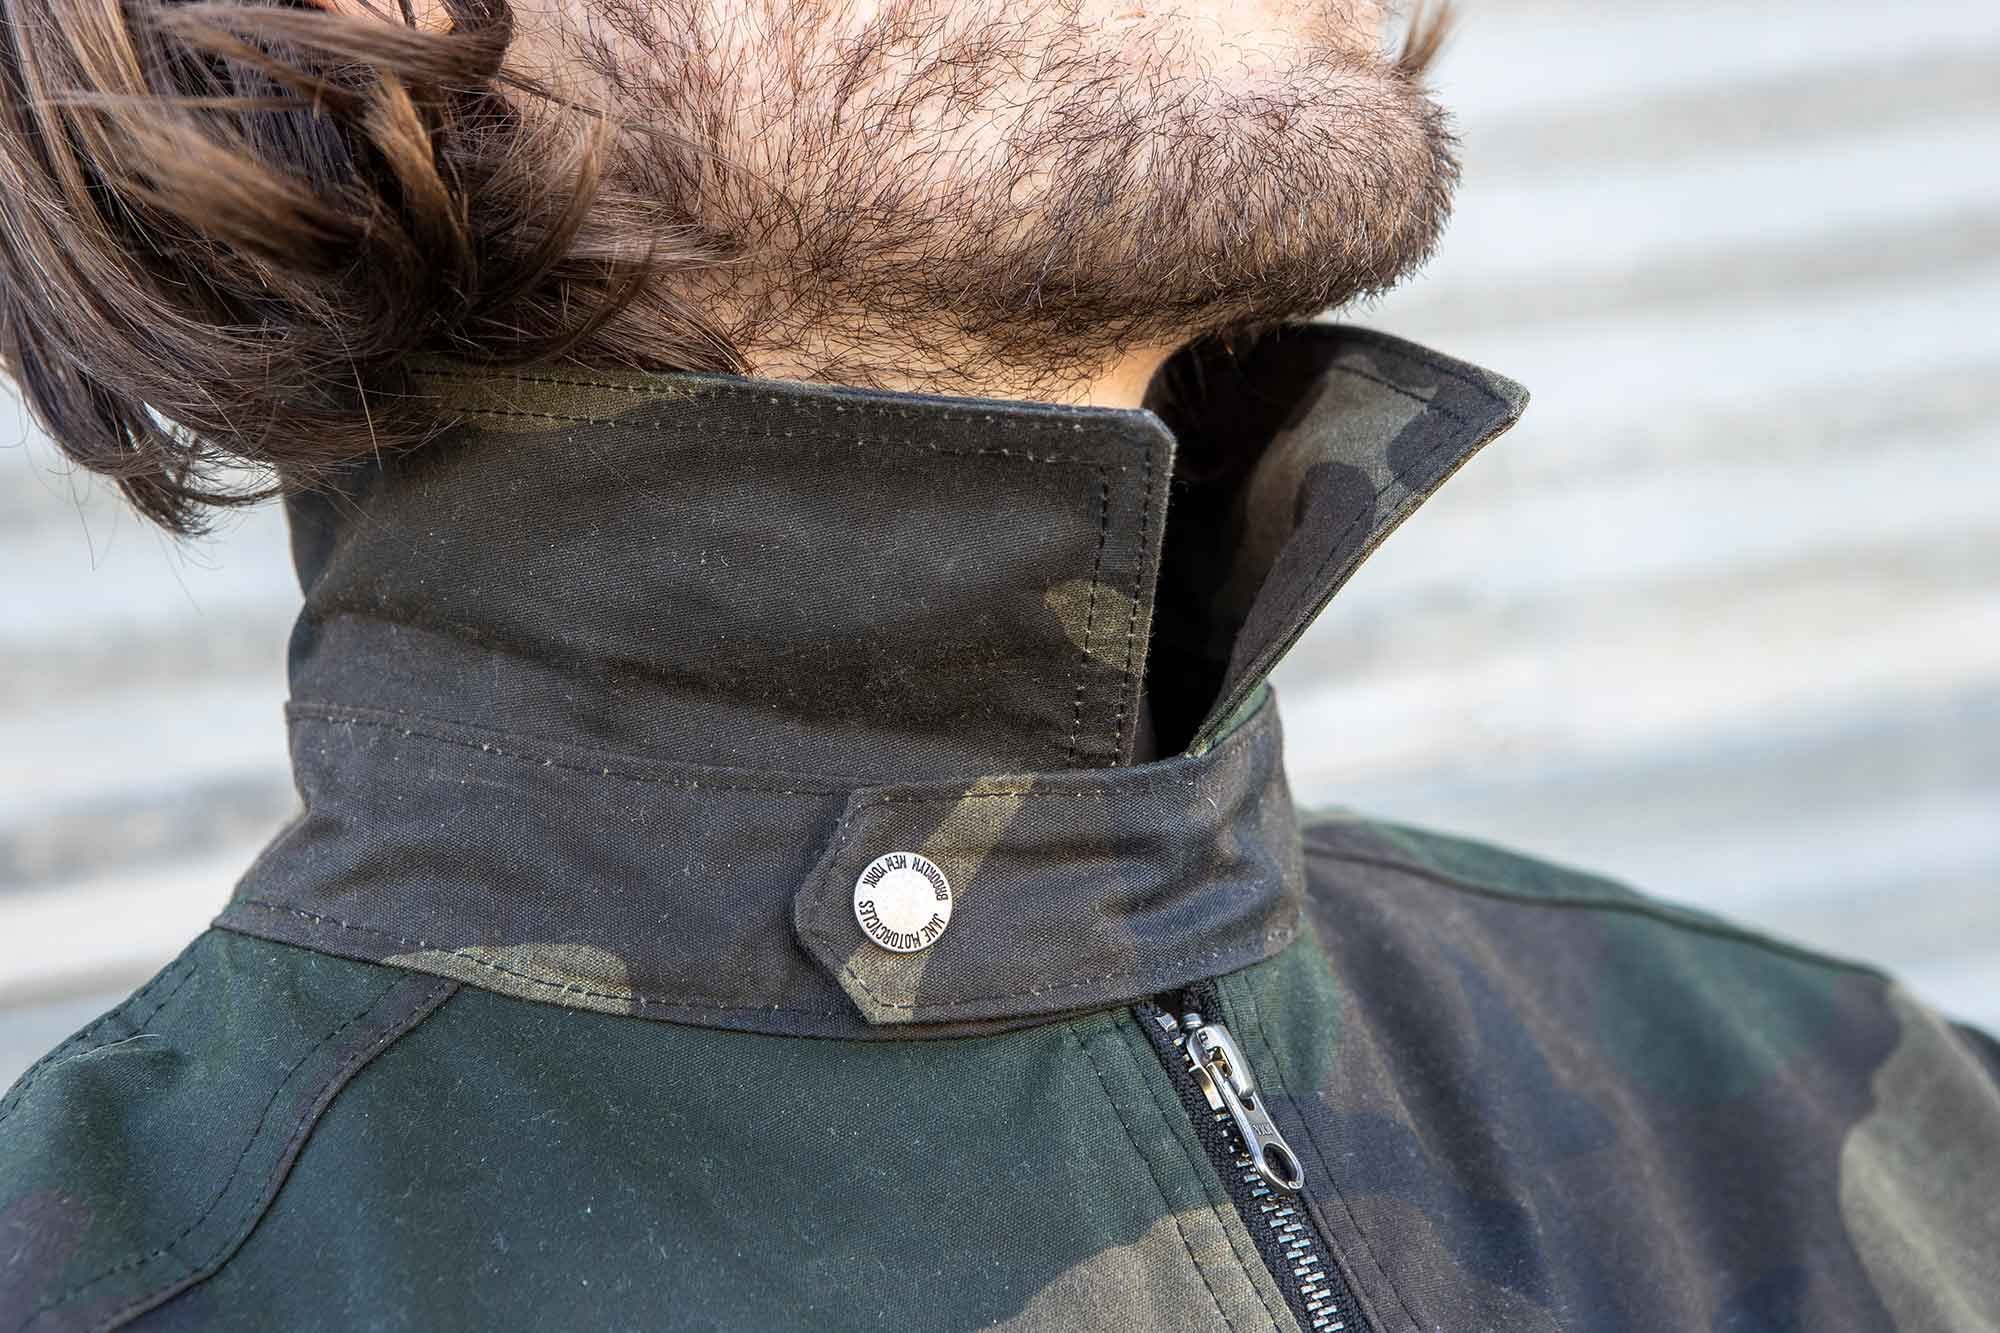 Collar snaps can increase windbreak when the temperature drops.